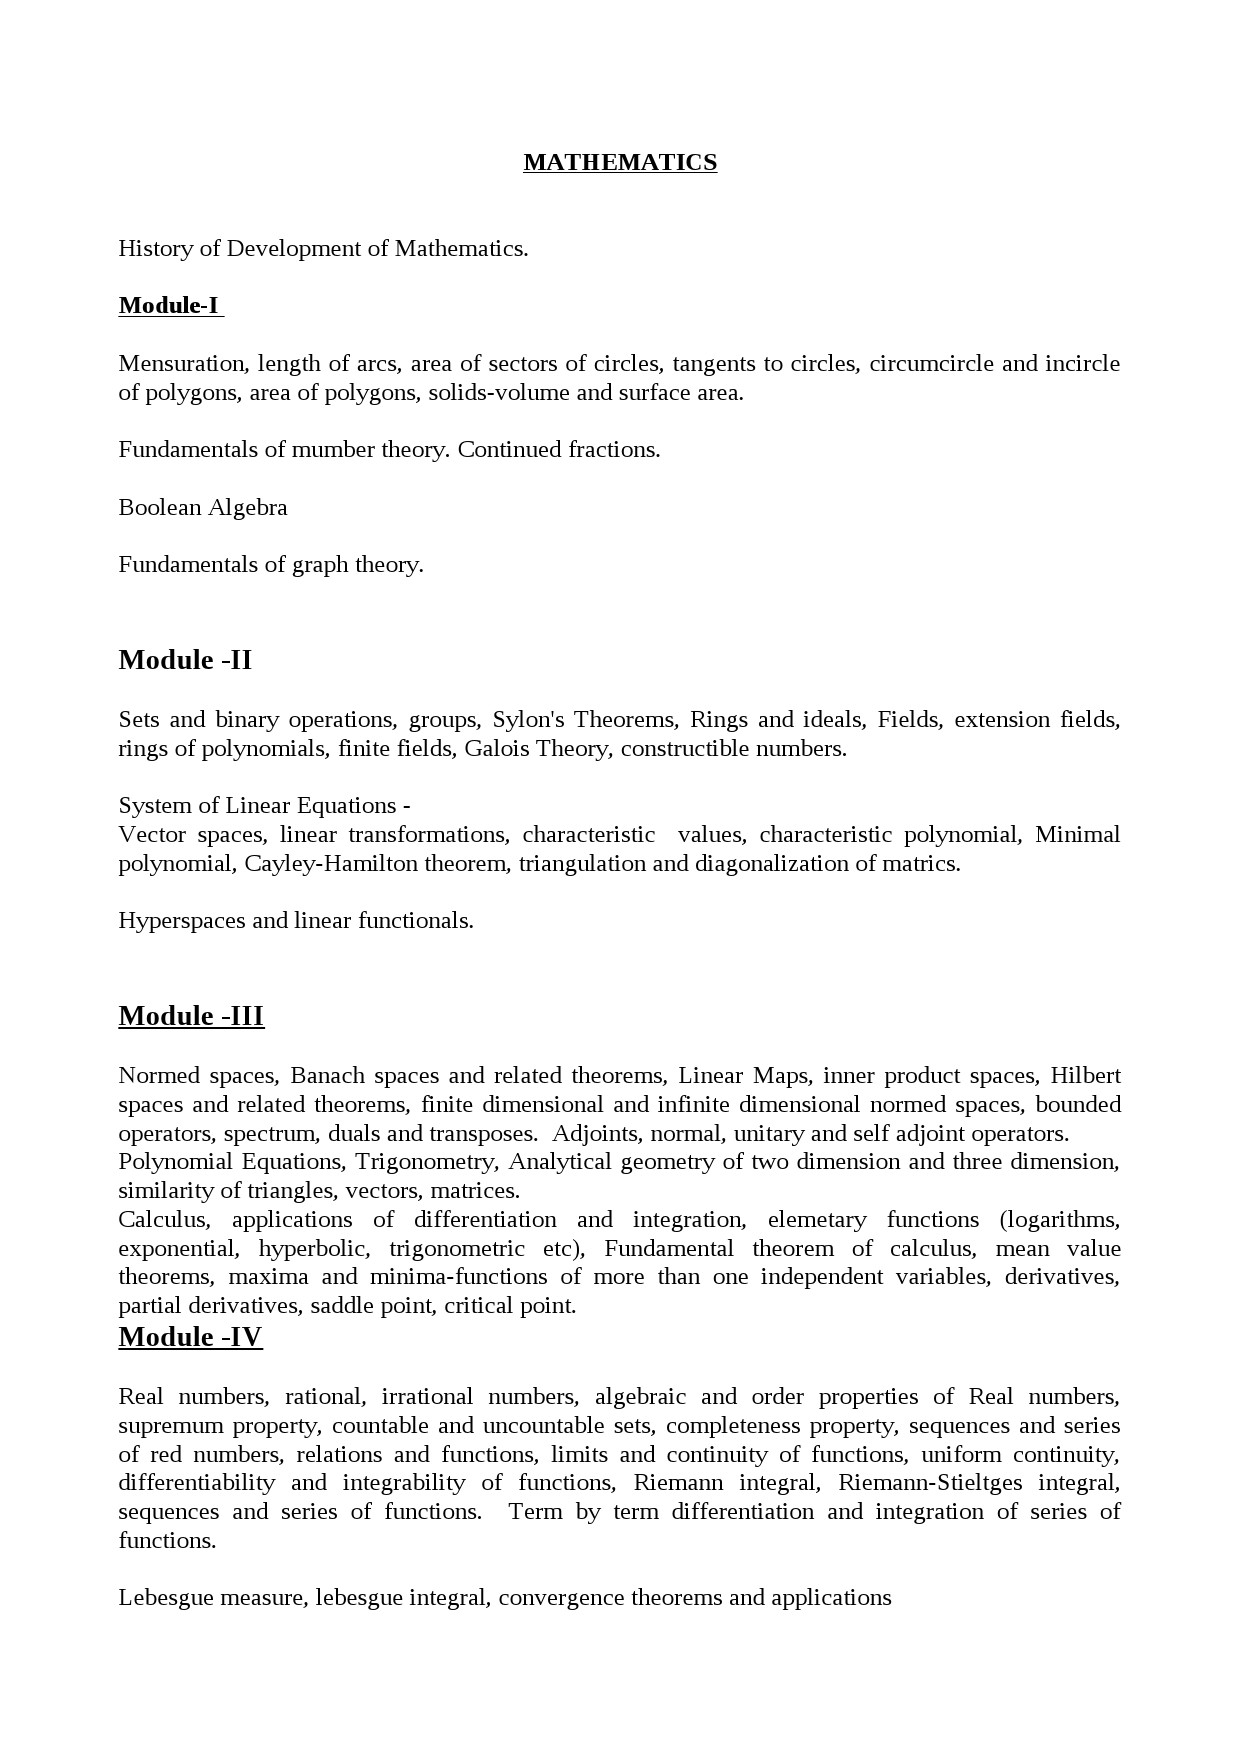 Science Syllabus for Kerala PSC 2021 Exam - Notification Image 9